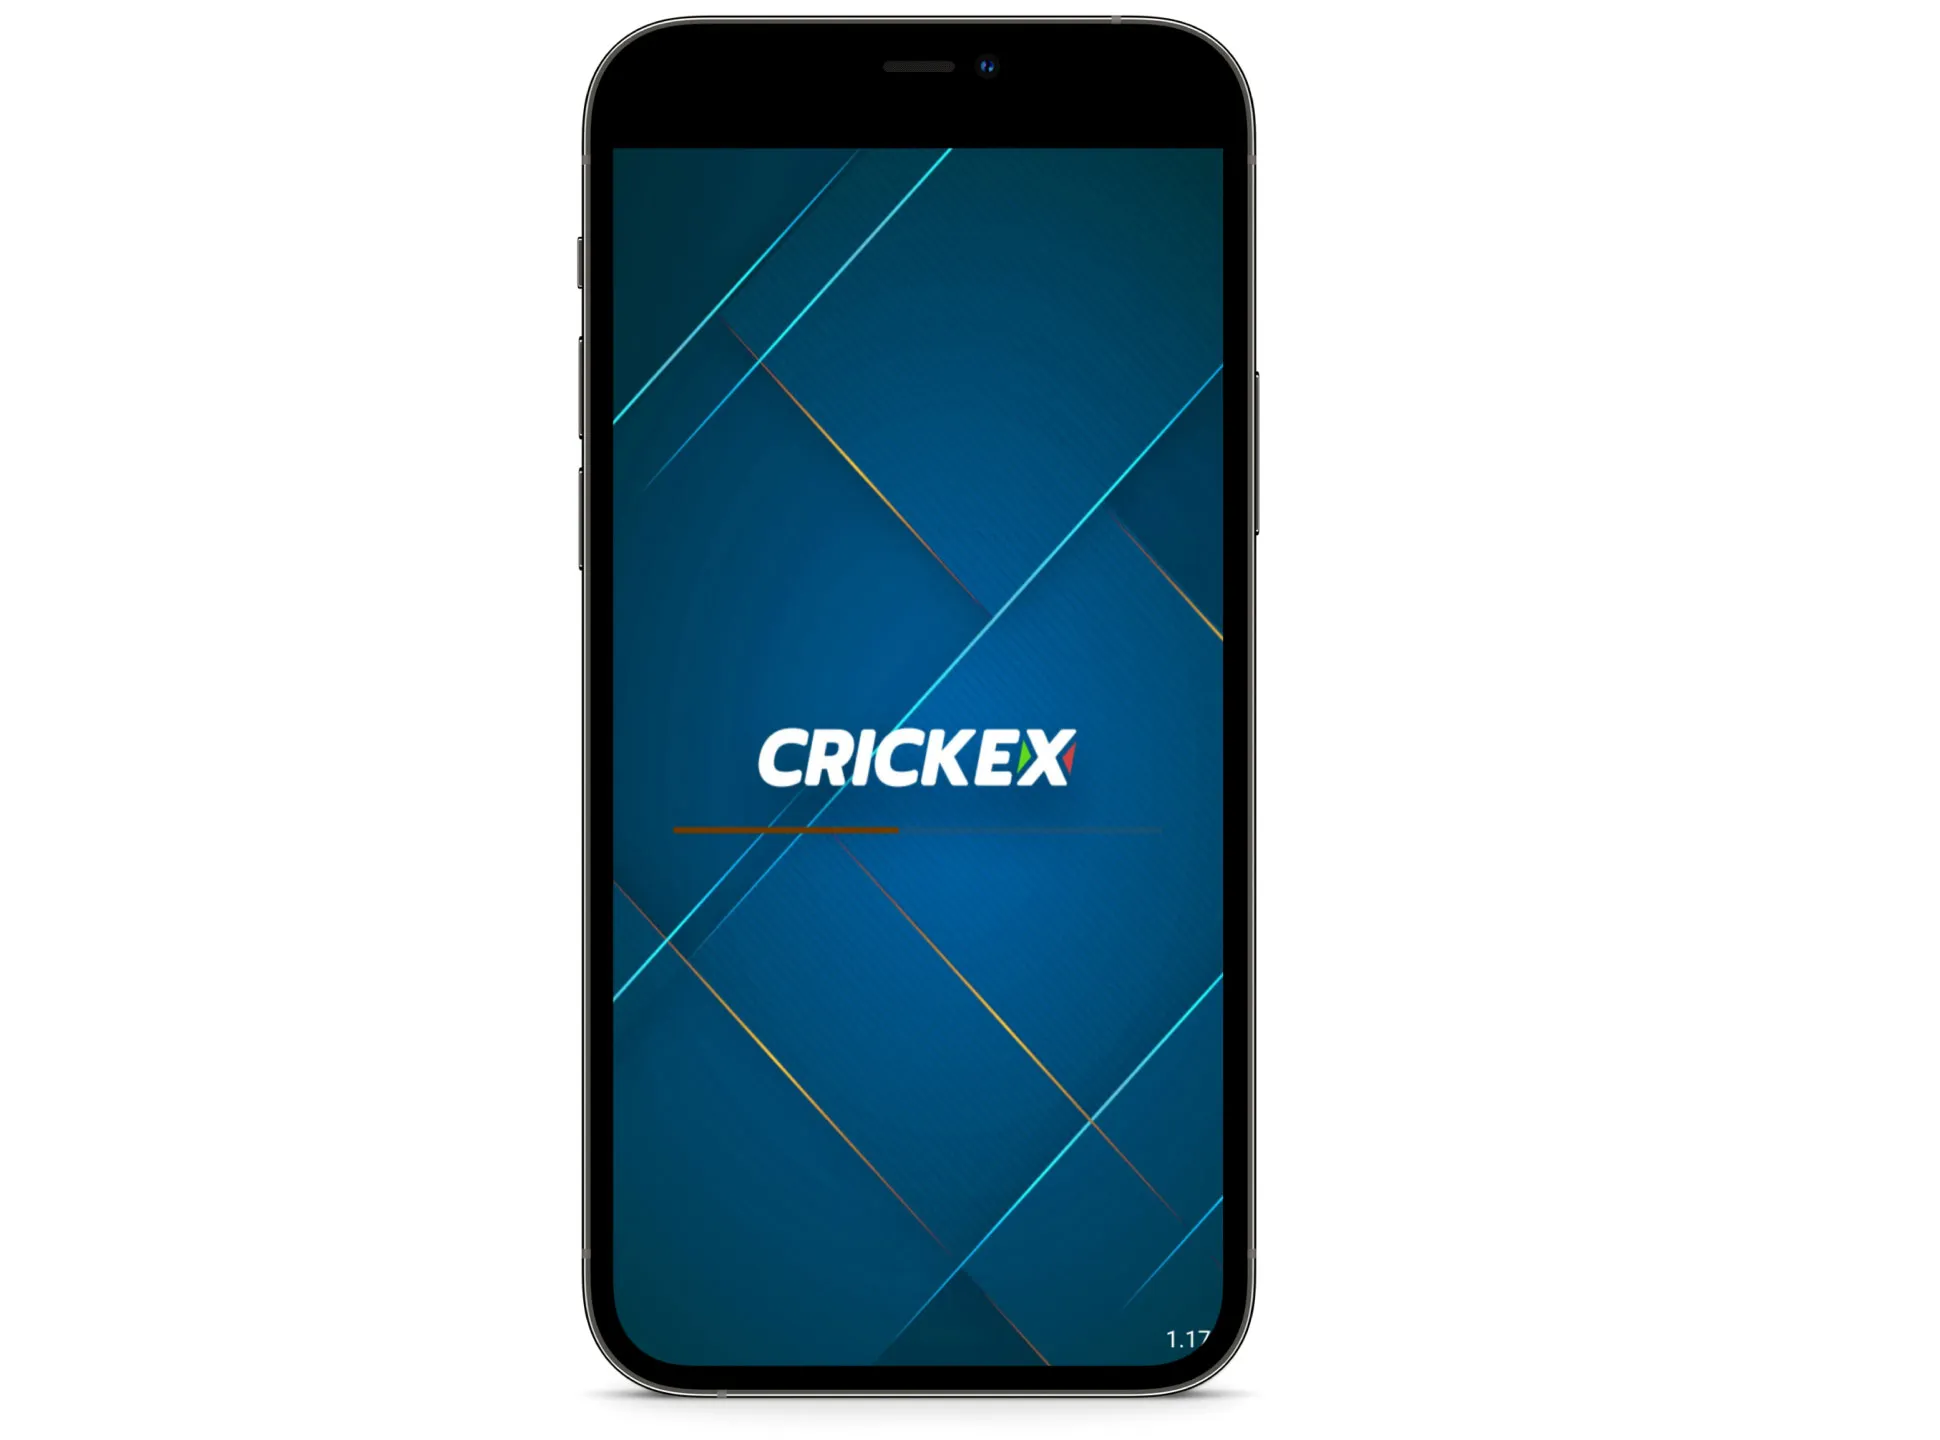 Use Crickex on the iOS platform.